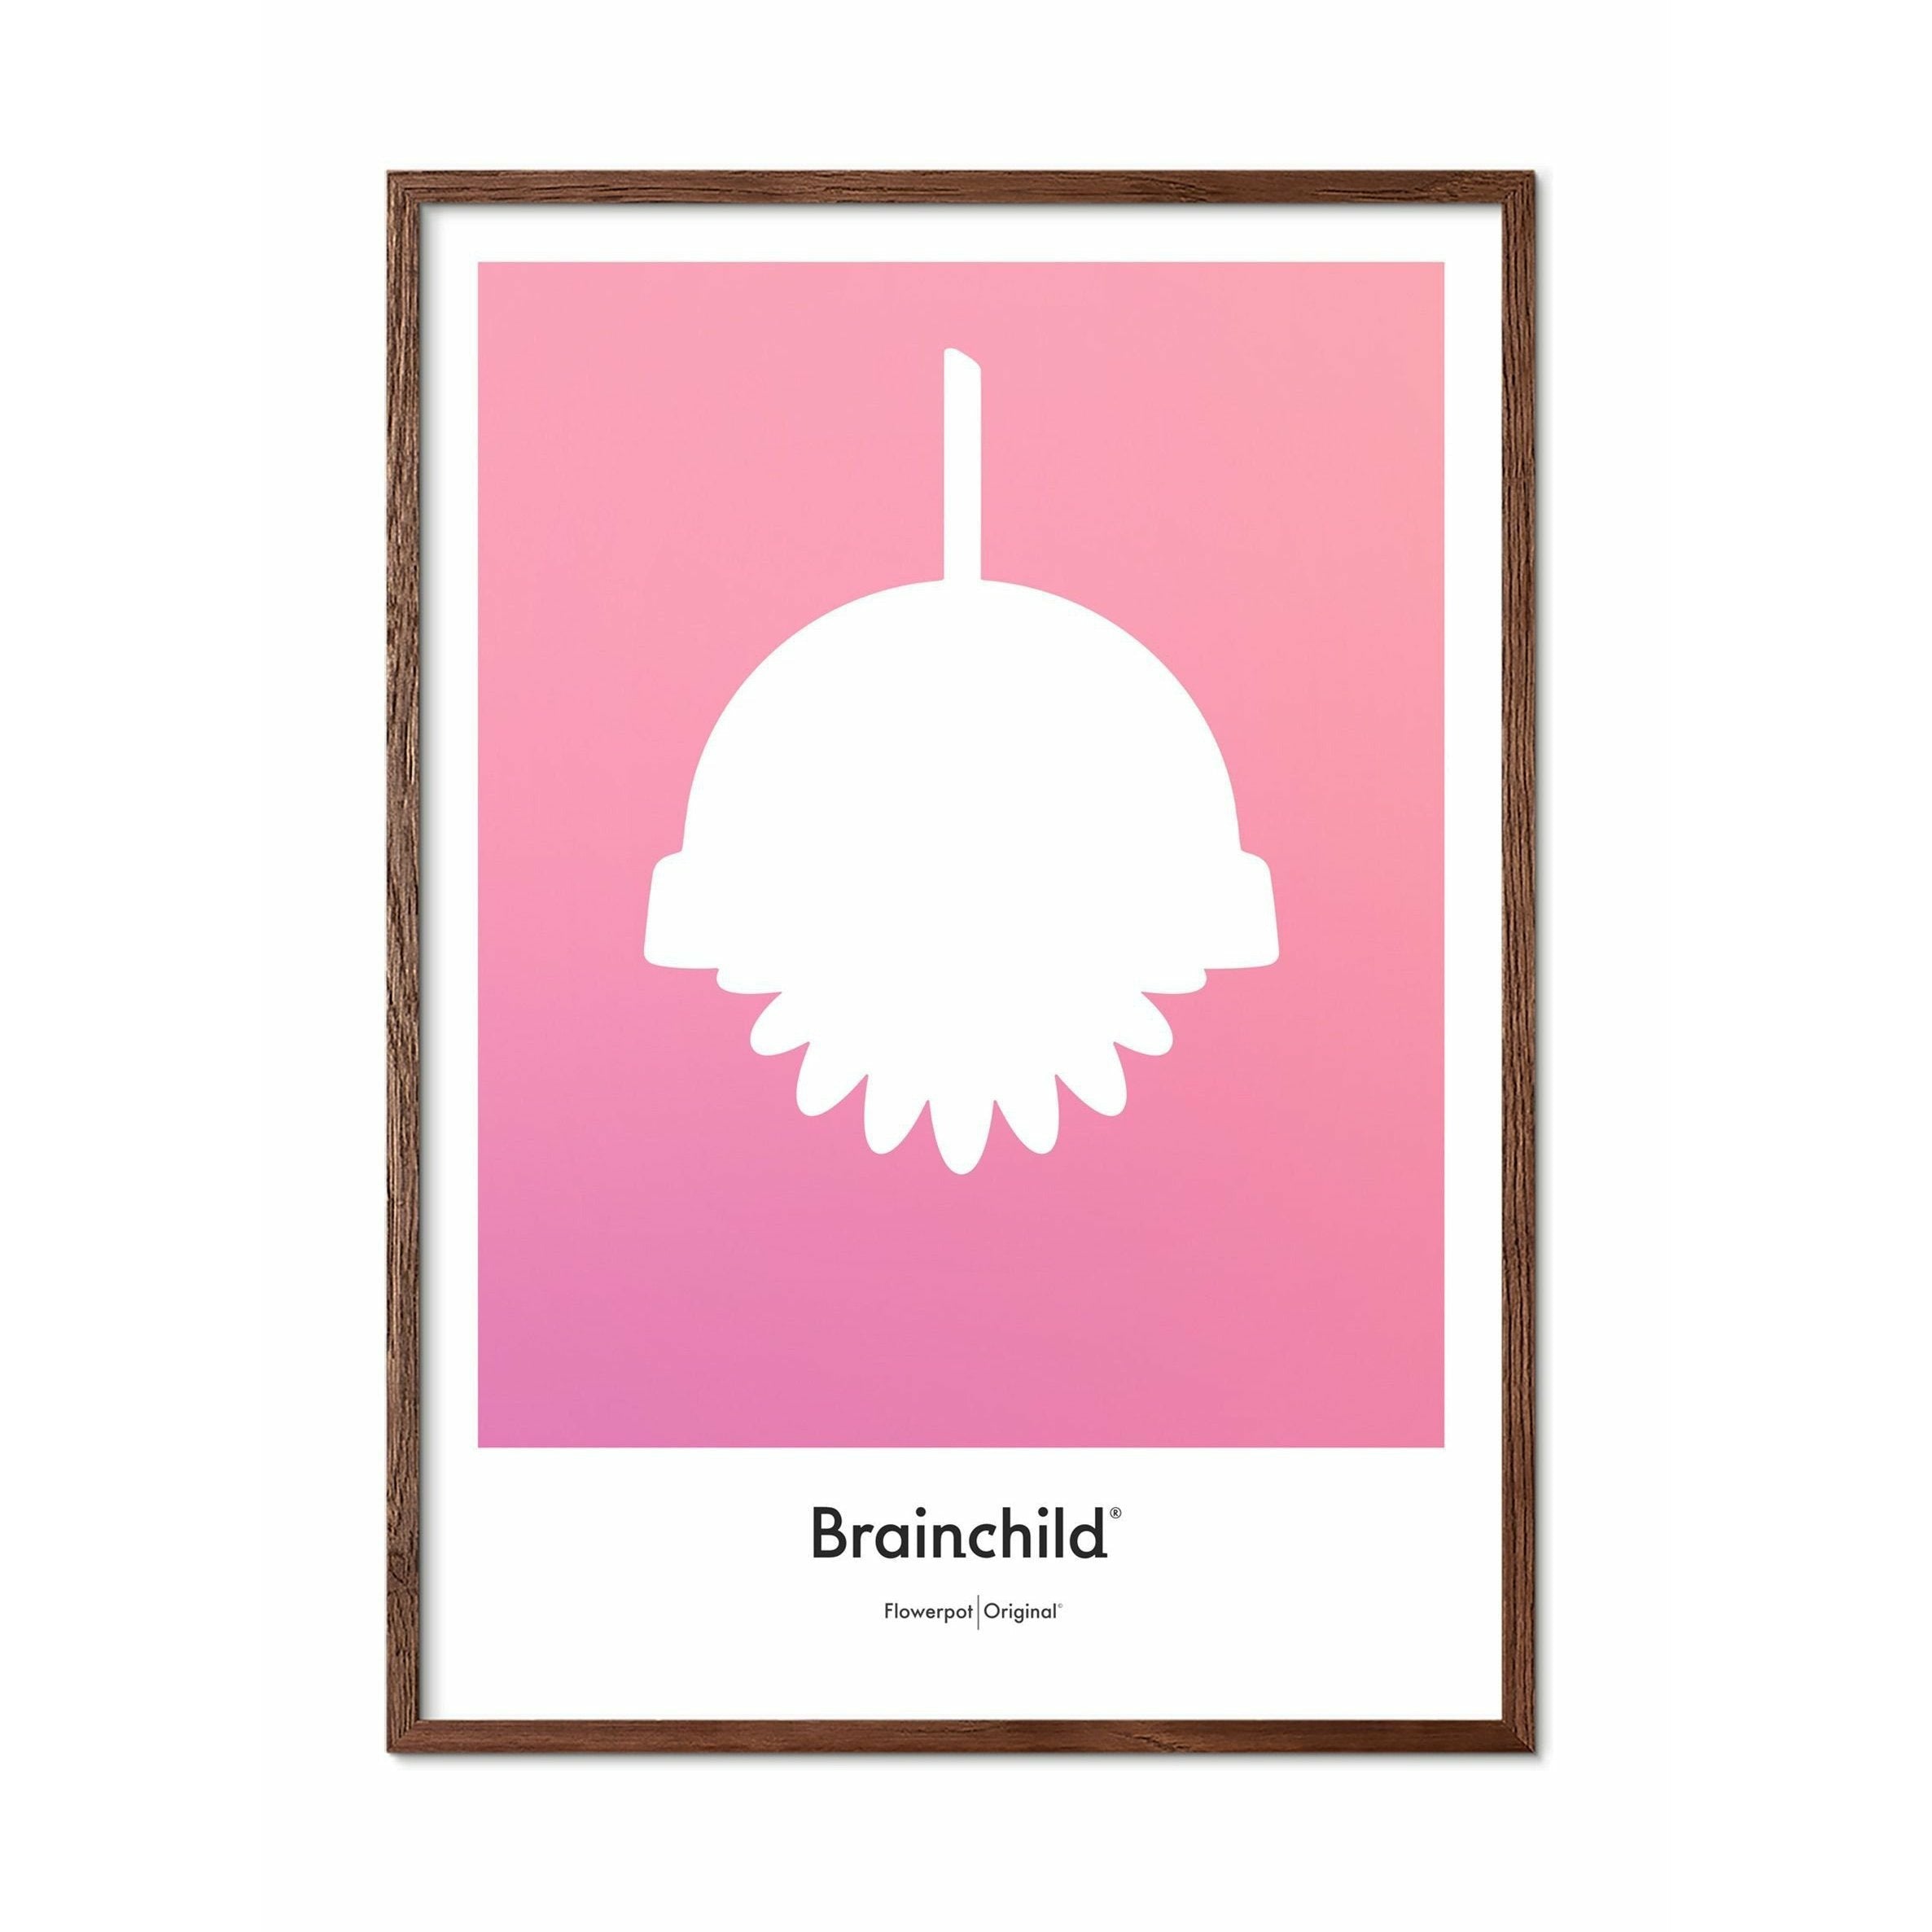 Brainchild Flowerpot Designikon Plakat, Ramme I Mørkt Træ A5, Rosa